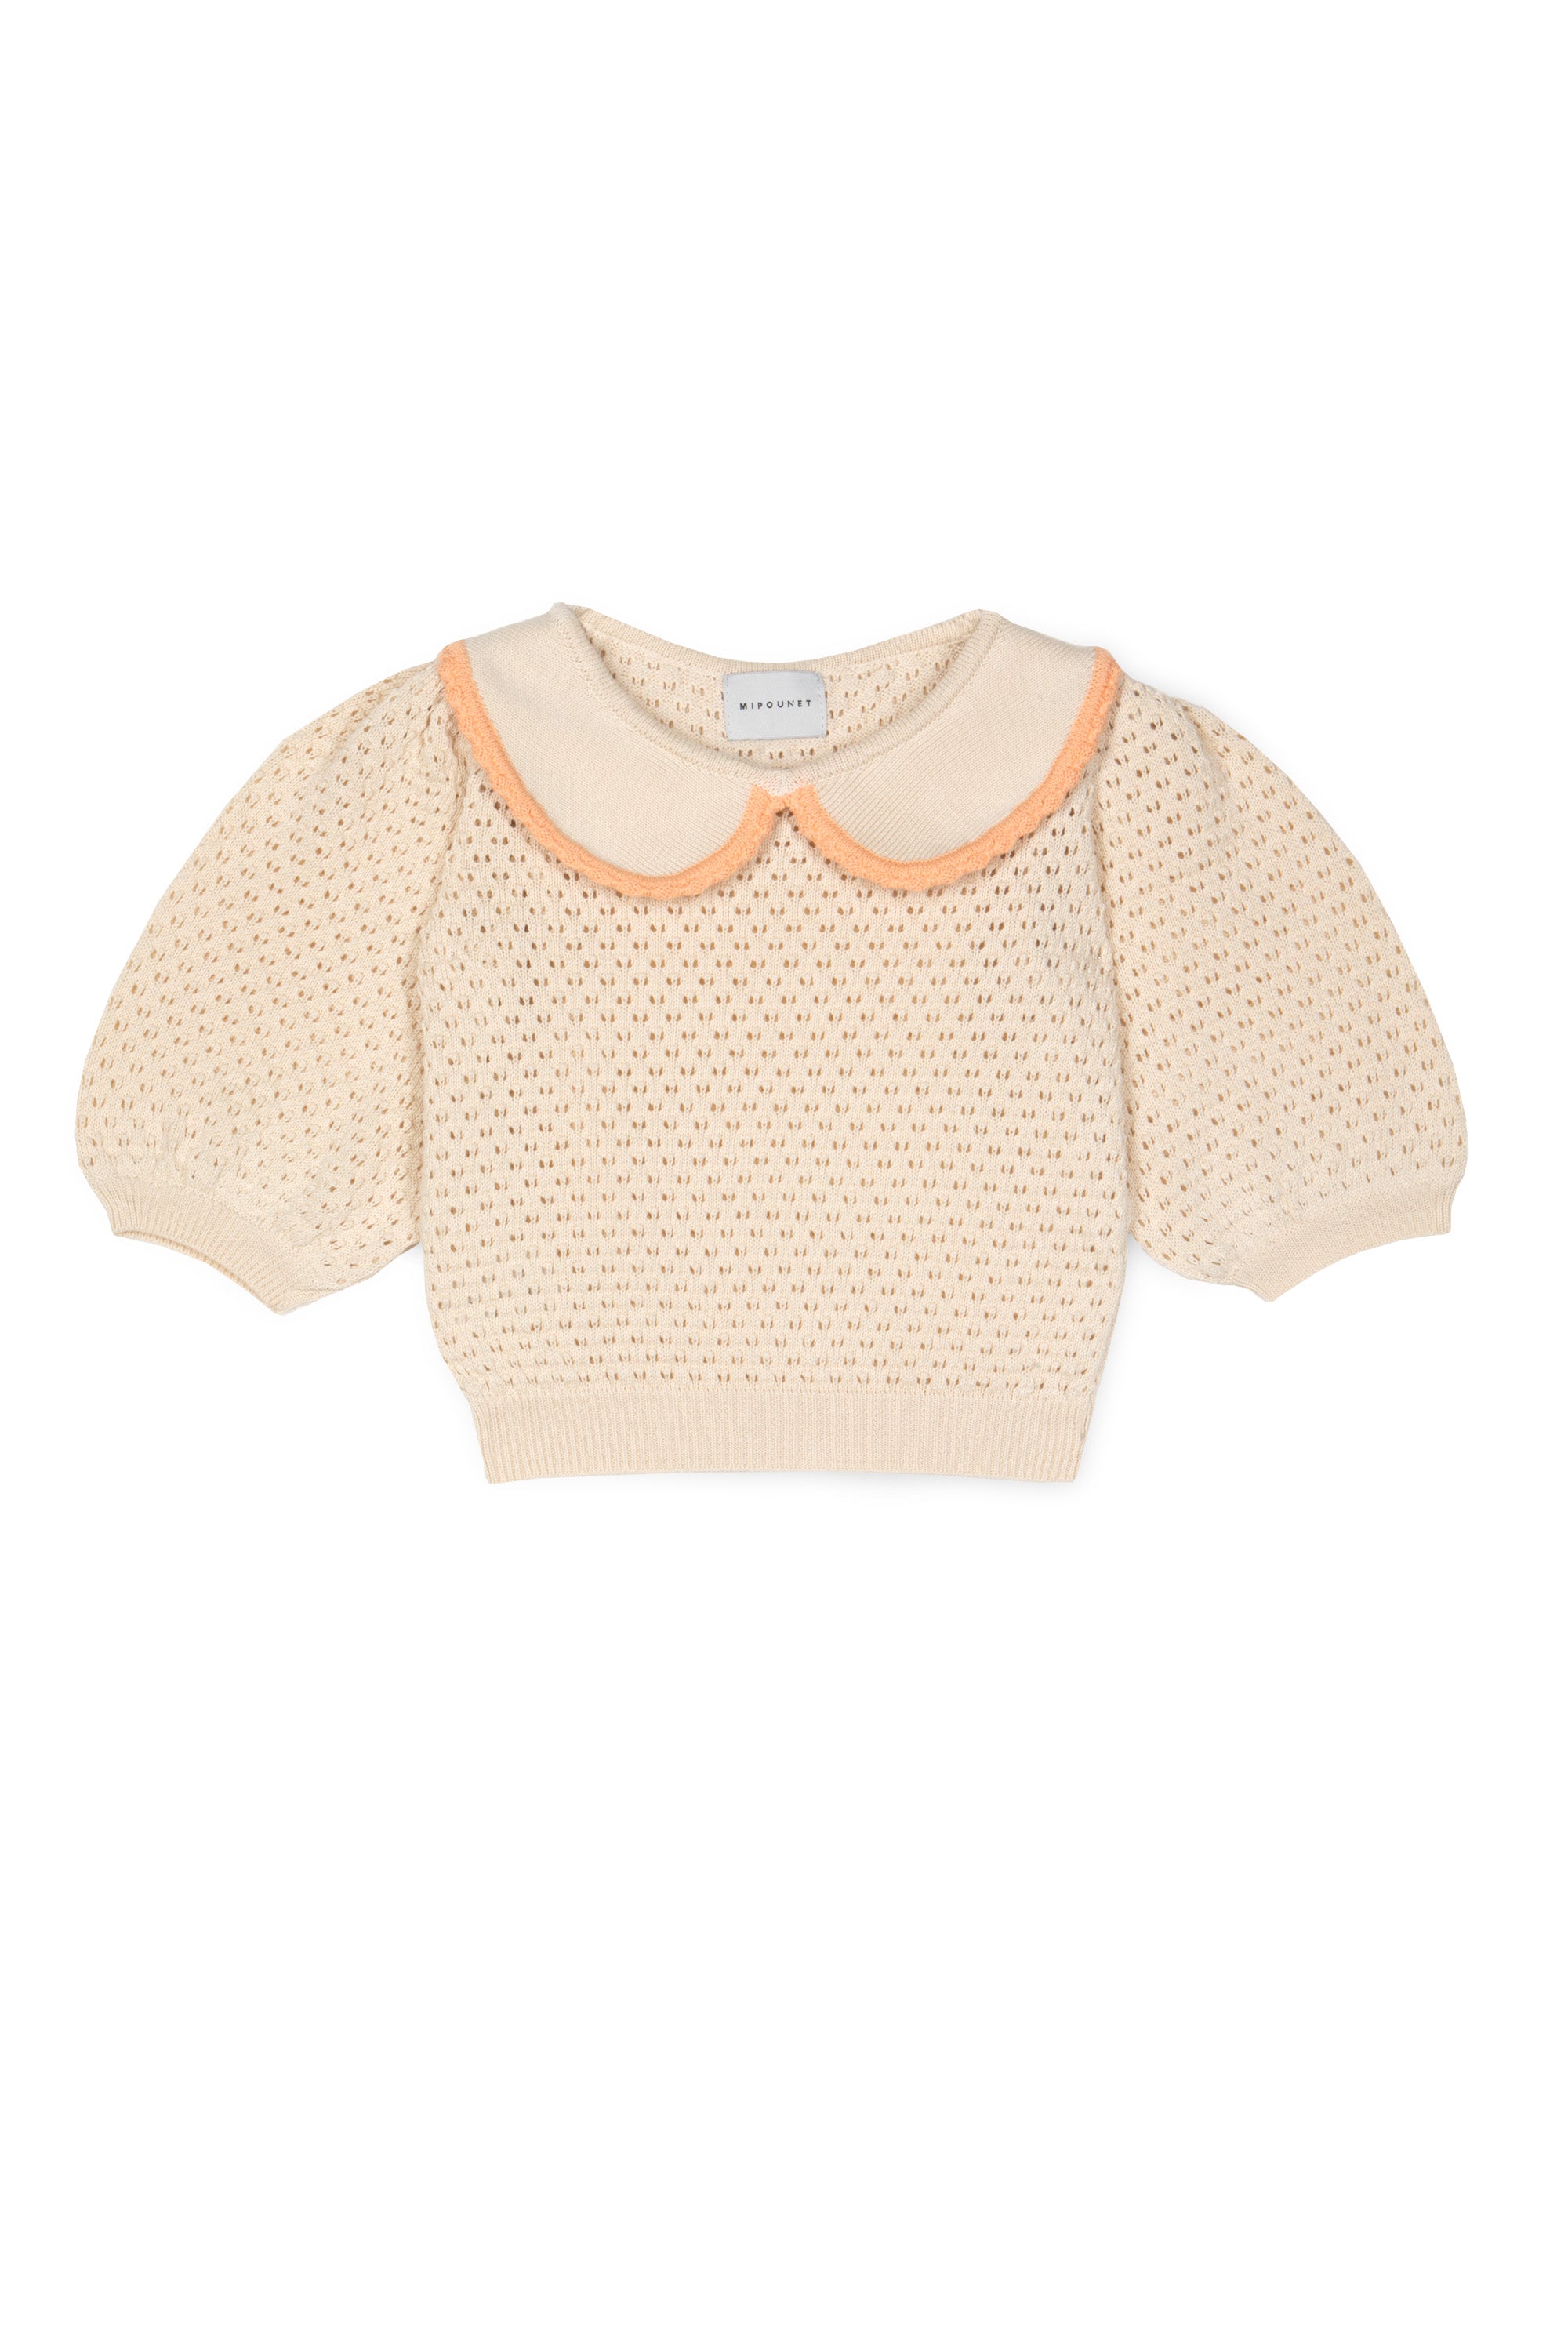 Mipounet - carola collared openwork sweater